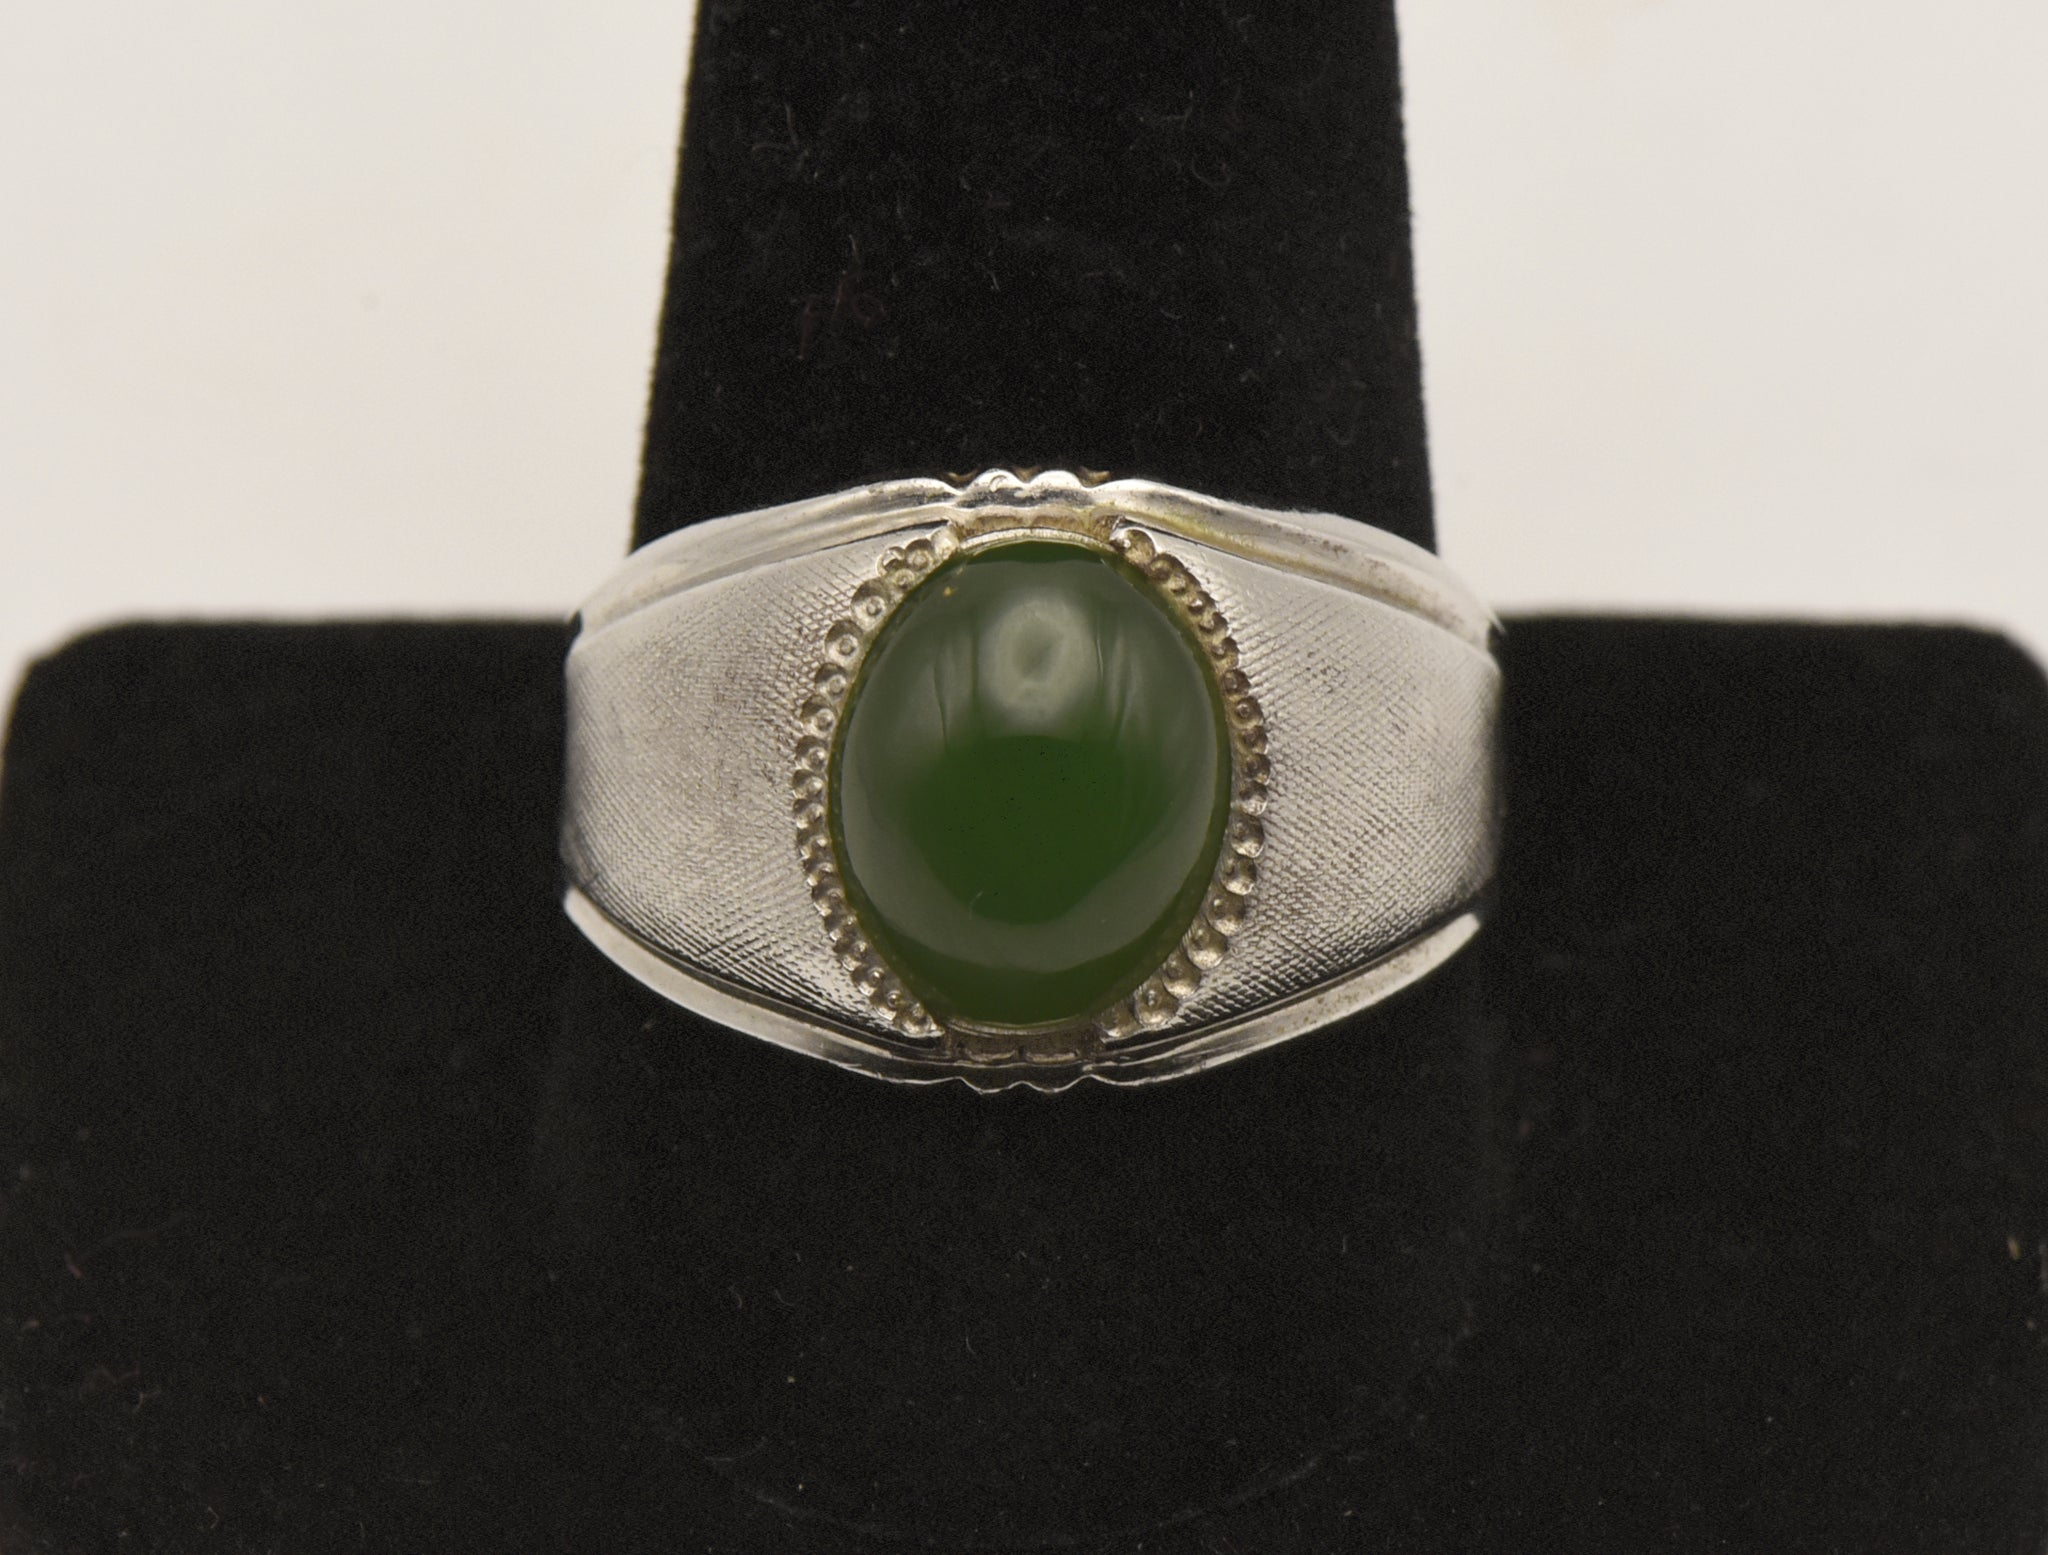 Vintage Jade Sterling Silver Ring - Size 11.25